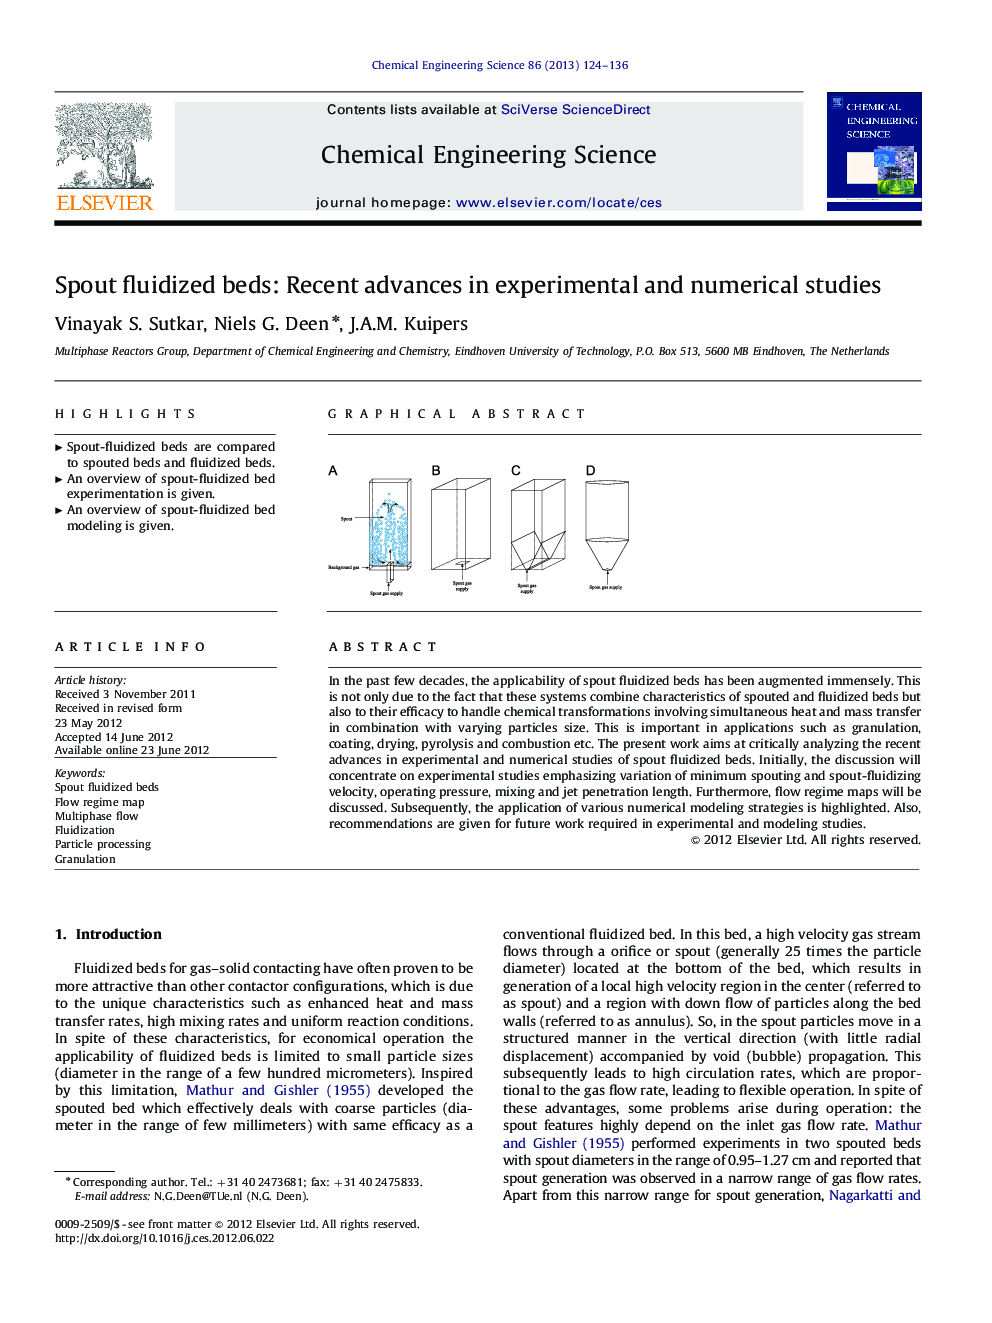 Spout fluidized beds: Recent advances in experimental and numerical studies